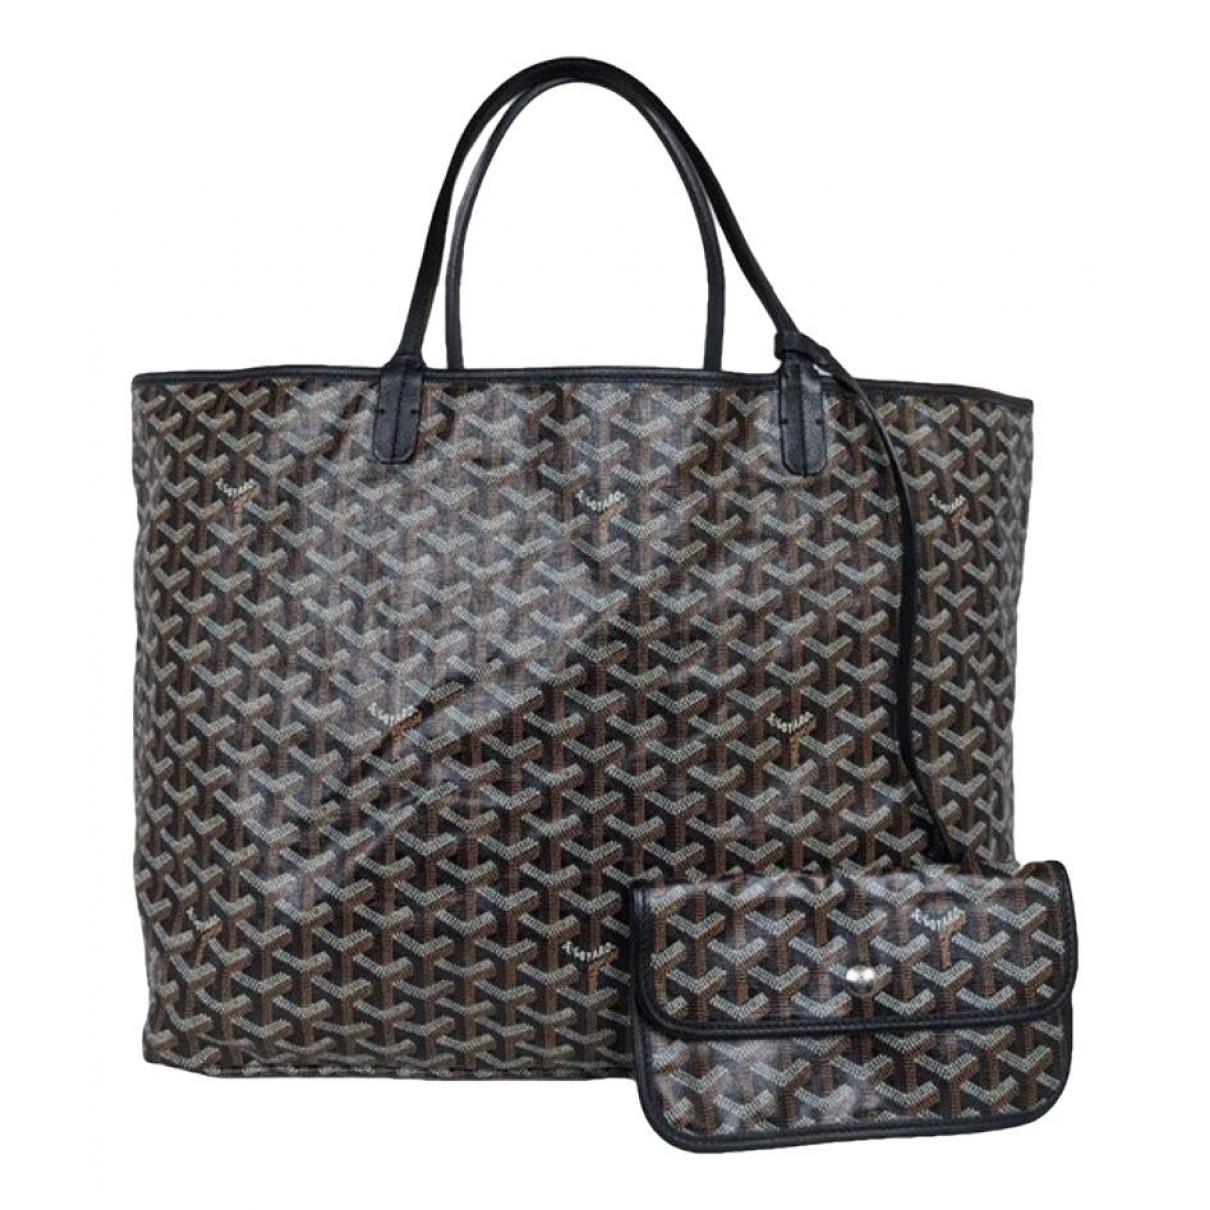 Goyard Handbag  Buy or Sell your Designer Bags for women - Vestiaire  Collective